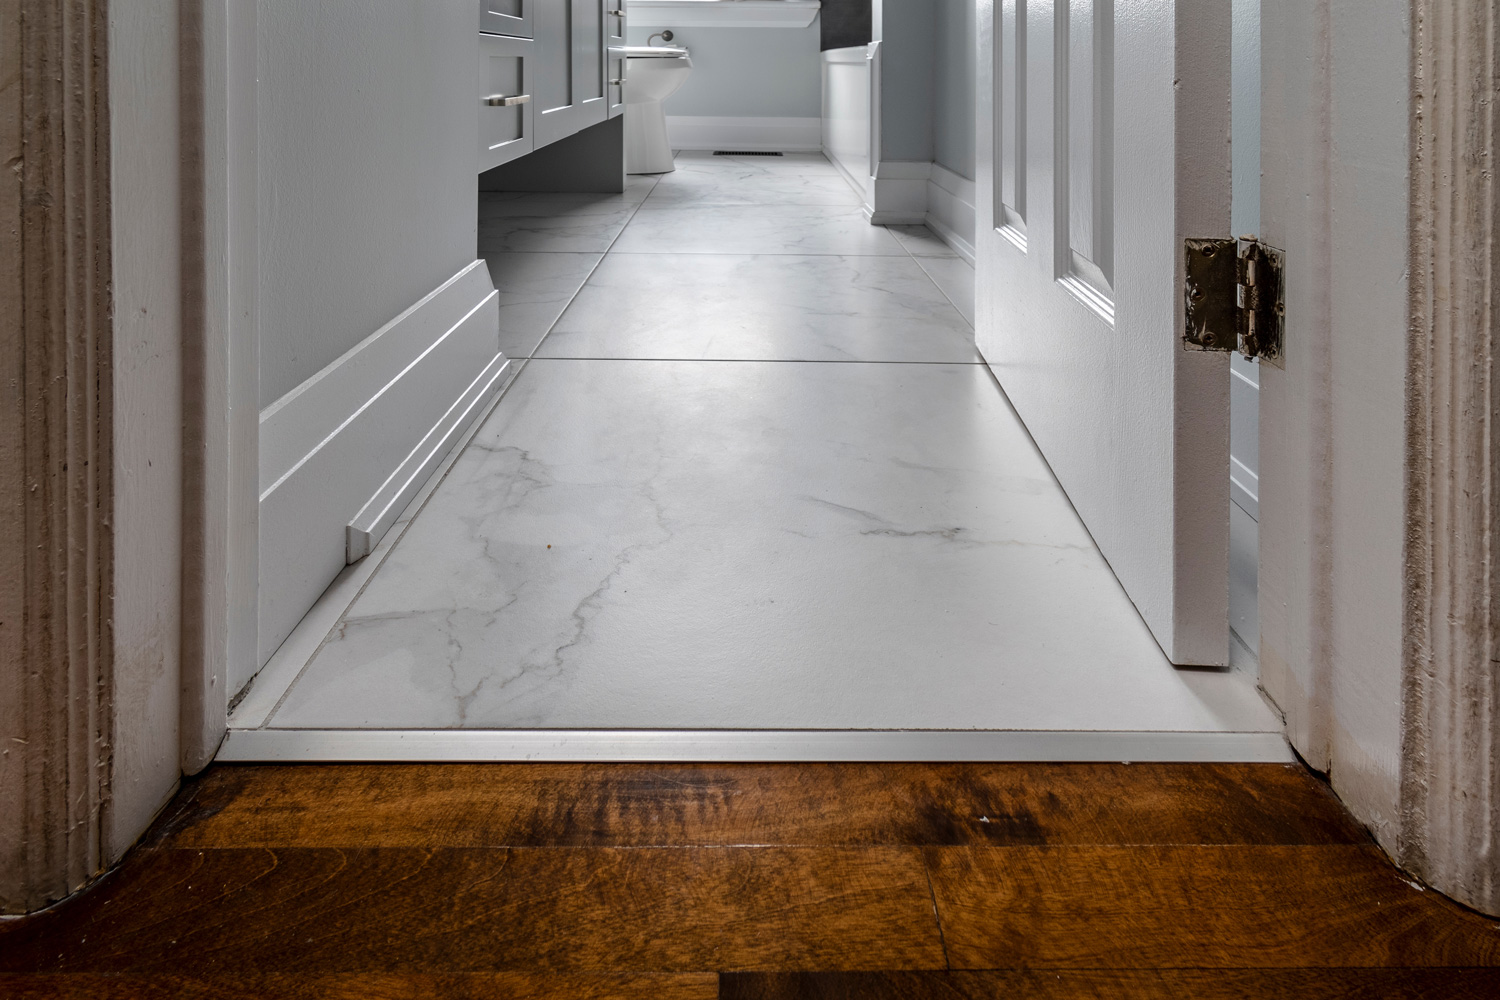 Wood floor transition to ceramic flooring - Bathroom renovations modern.